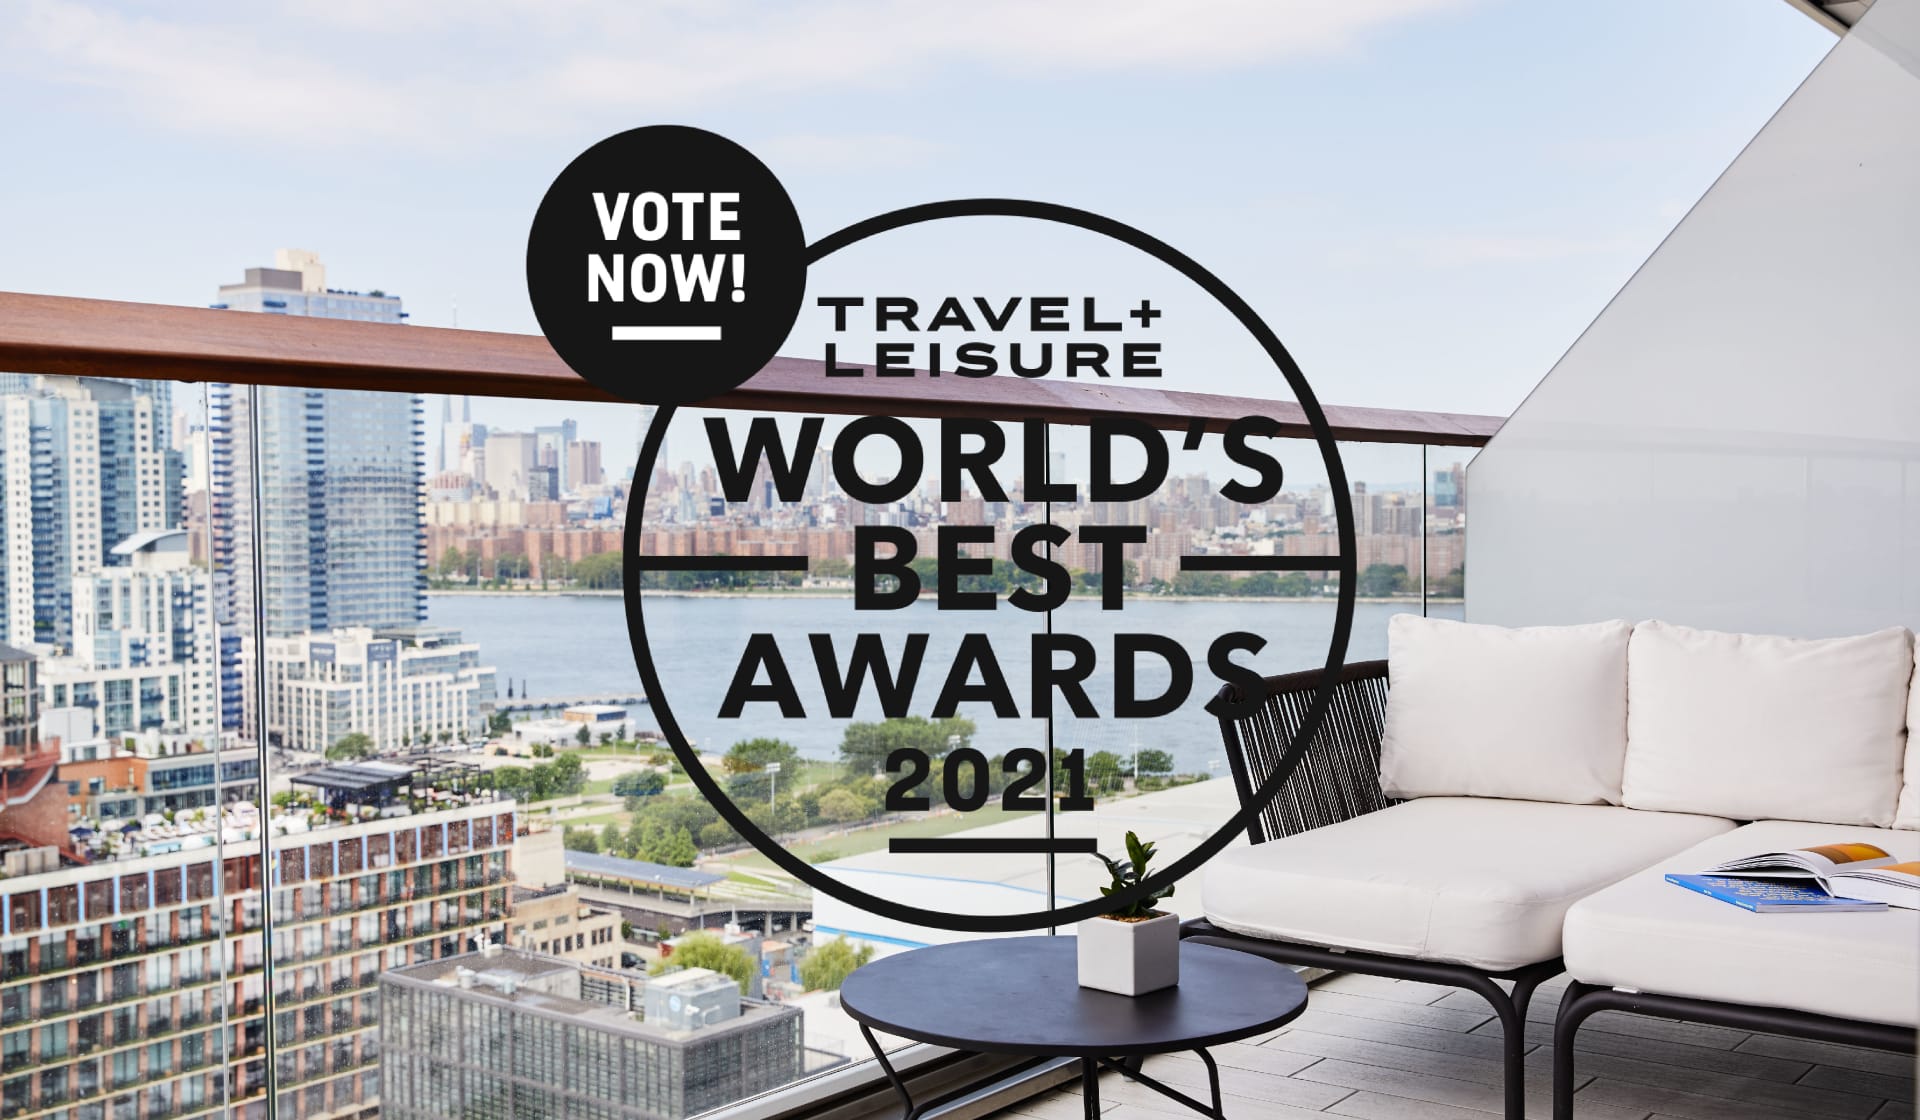 The William Vale Travel + Leisure World's Best Awards 2021